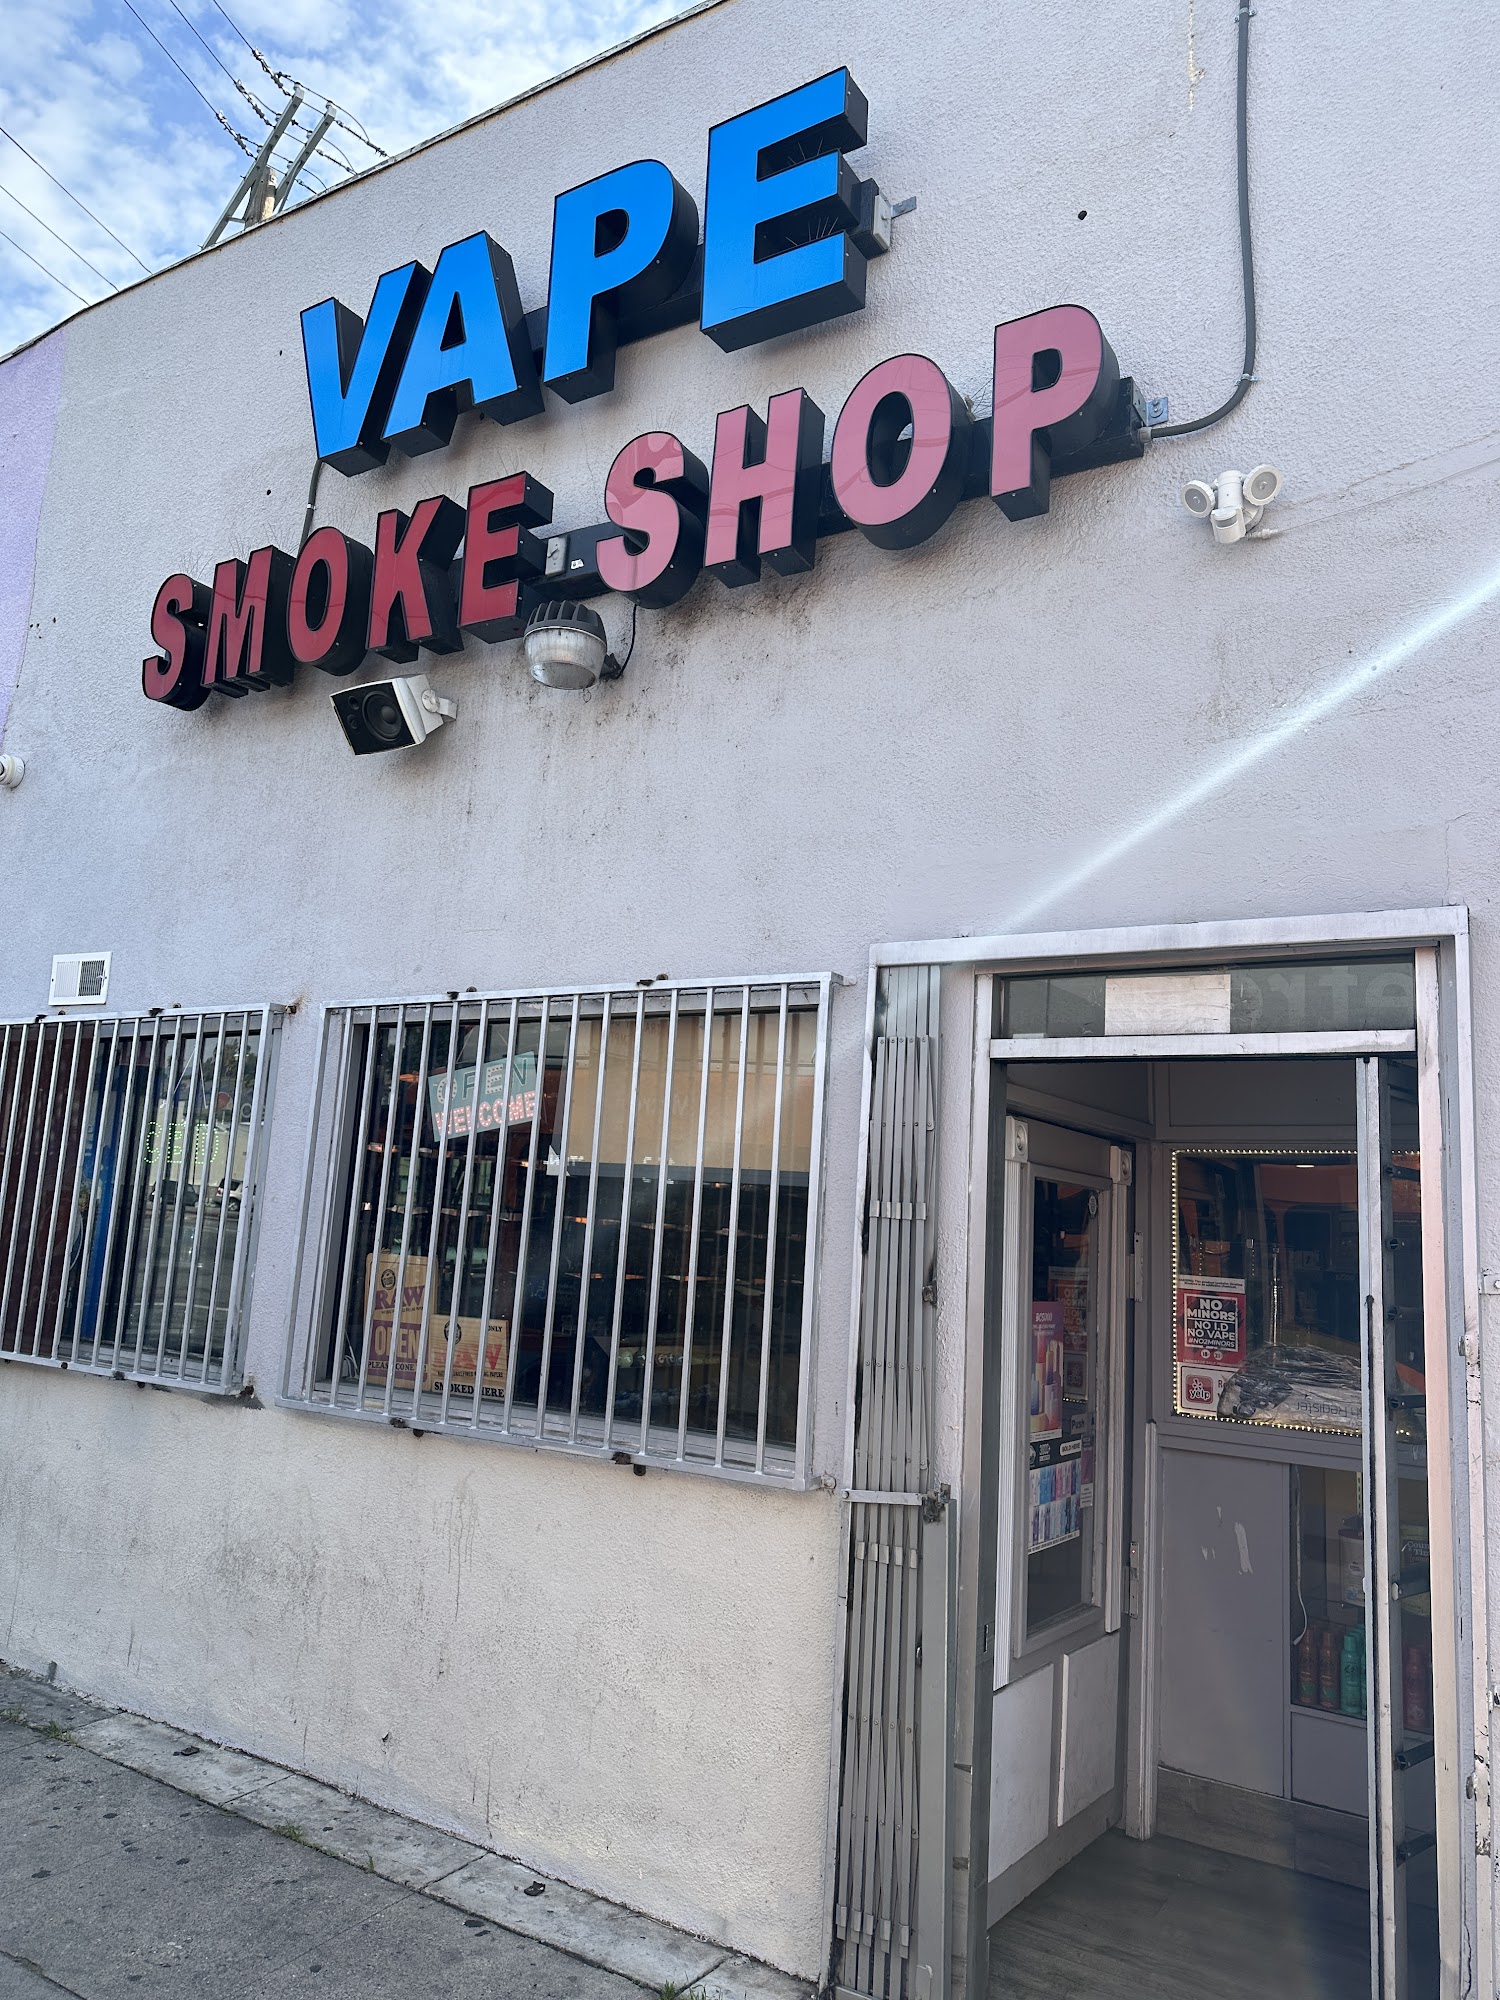 Vape smoke shop